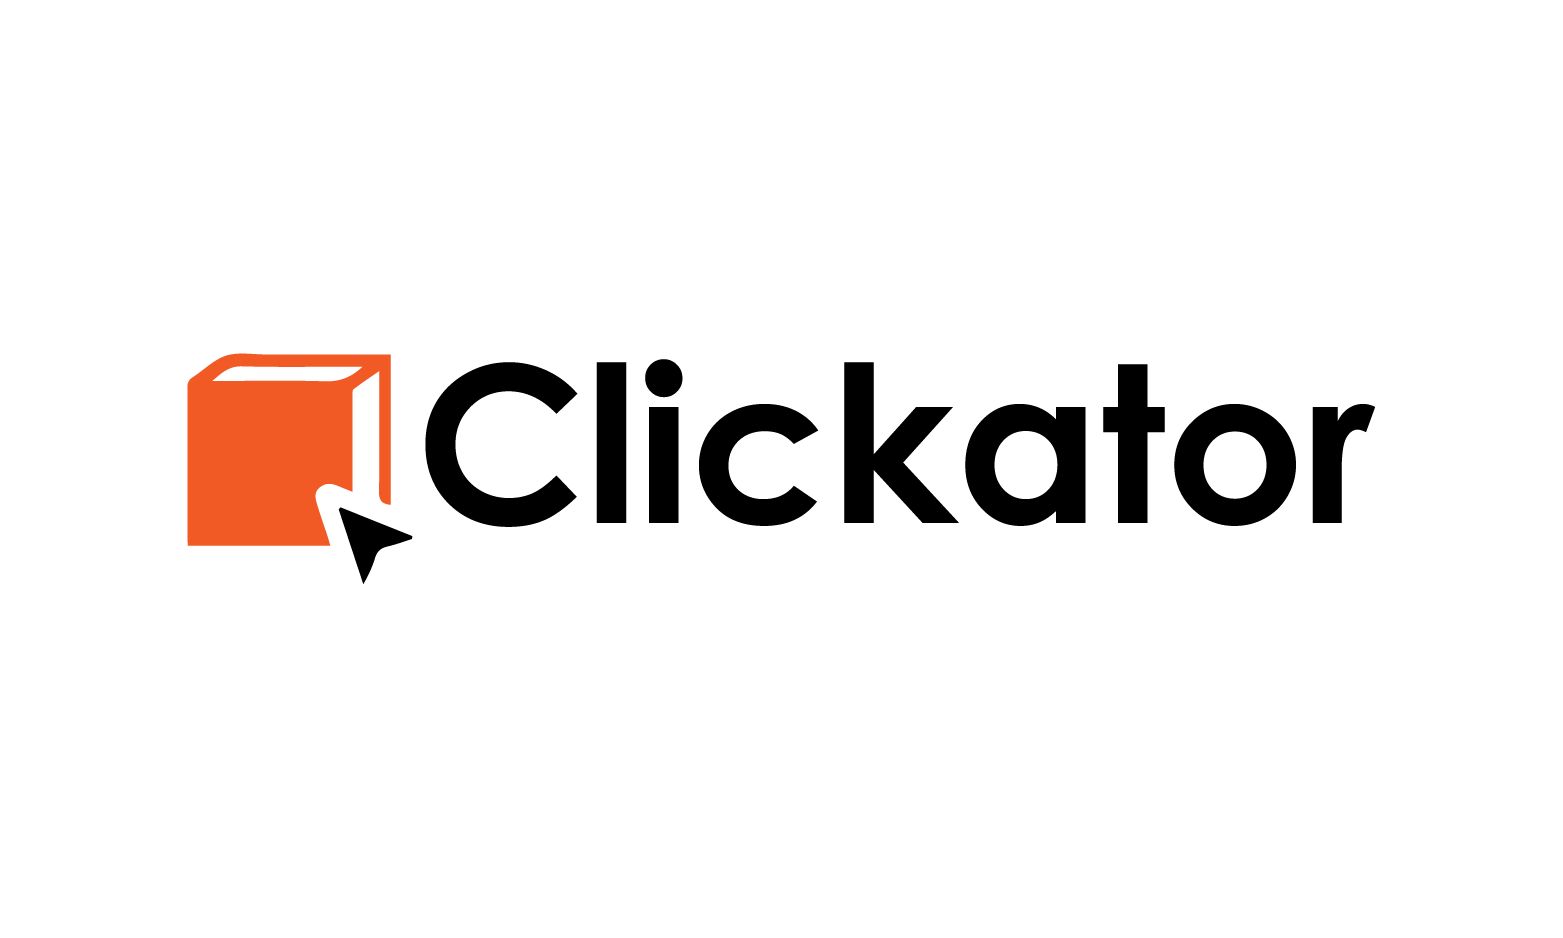 Clickator.com - Creative brandable domain for sale